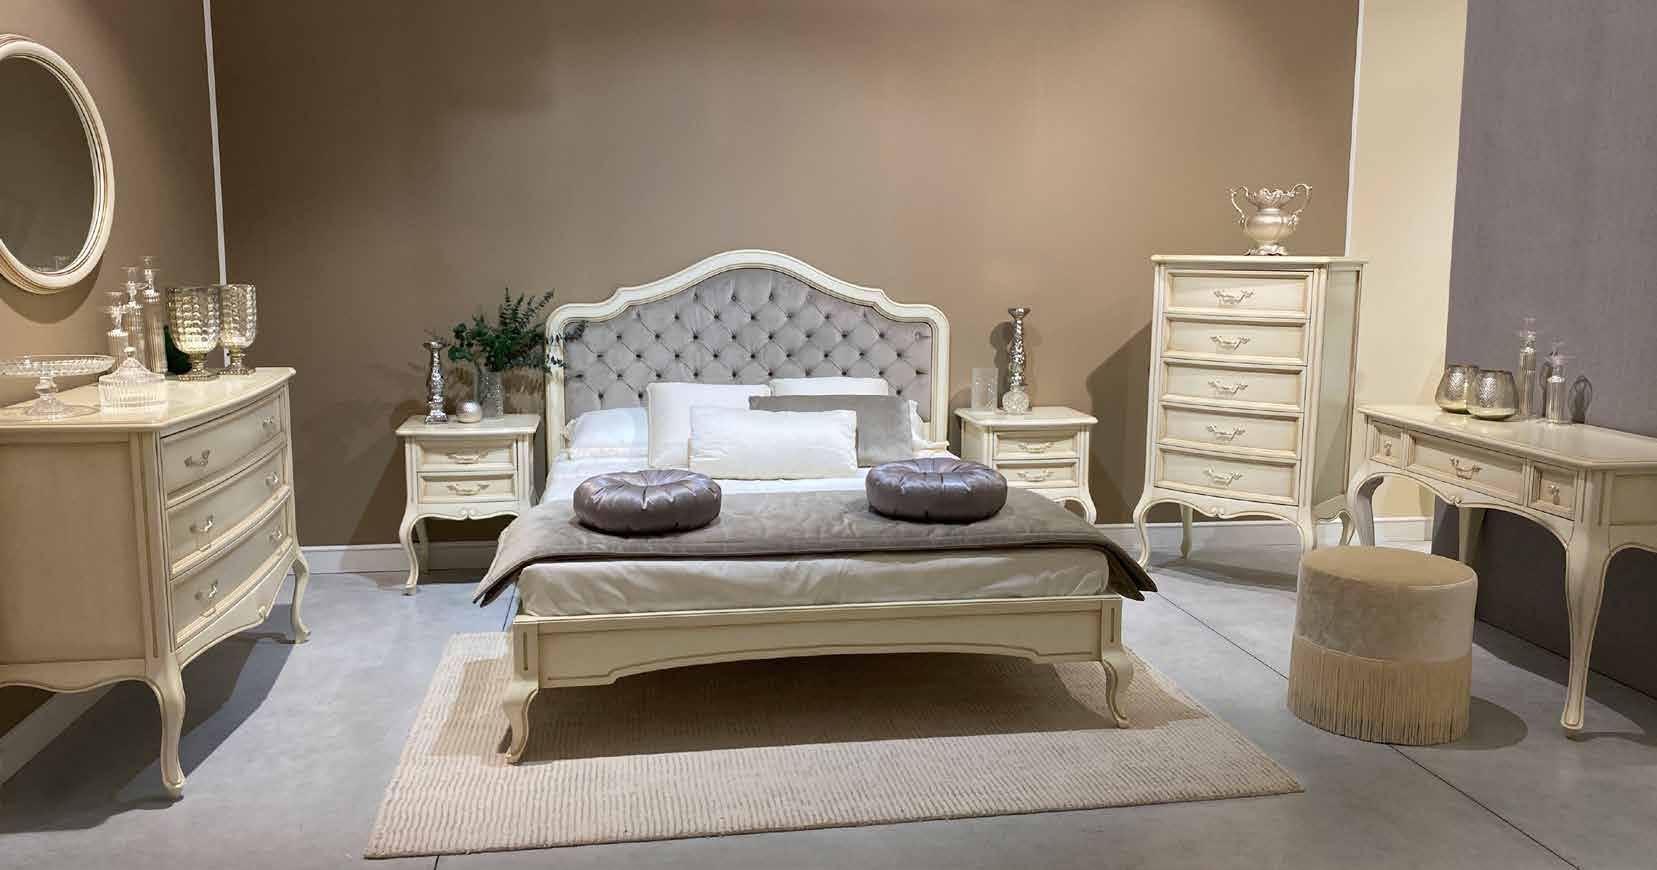 Кровать Camelgroup Verdi, 160х200 см, ткань Aquos 3 Cream (кат В), цвет: avorio patinado, размер 173х214х135 (169LET.03AV)169LET.03AV